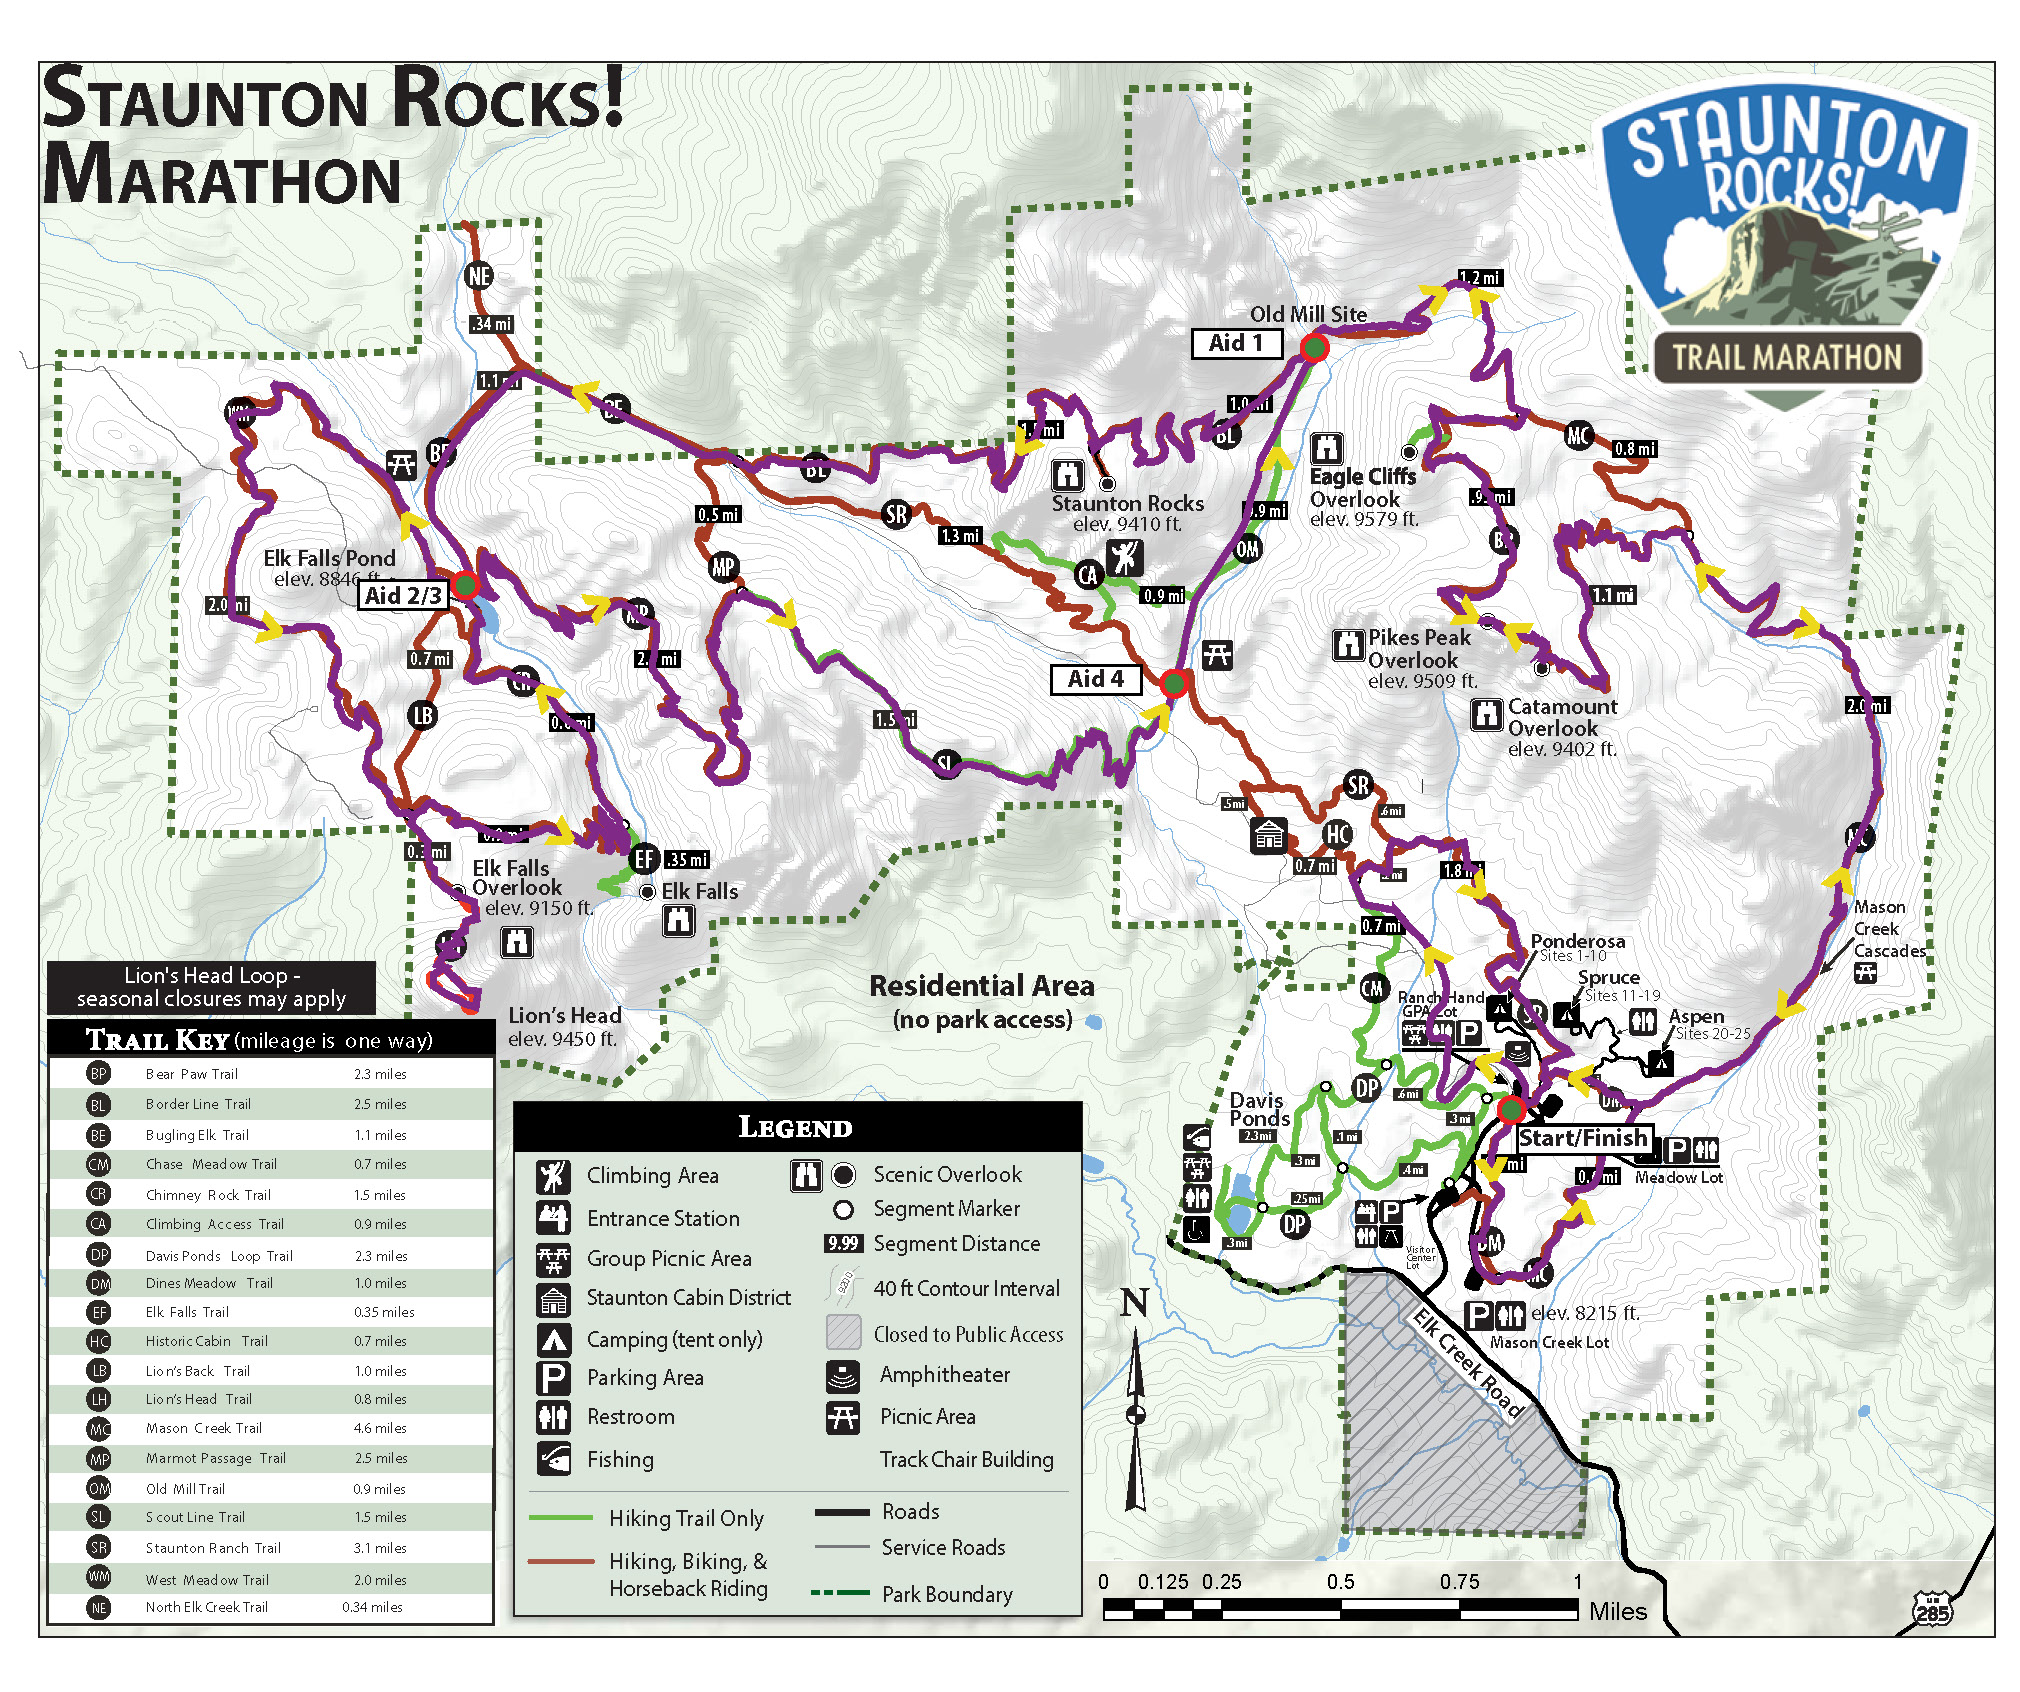 Staunton Rocks! Marathon Map